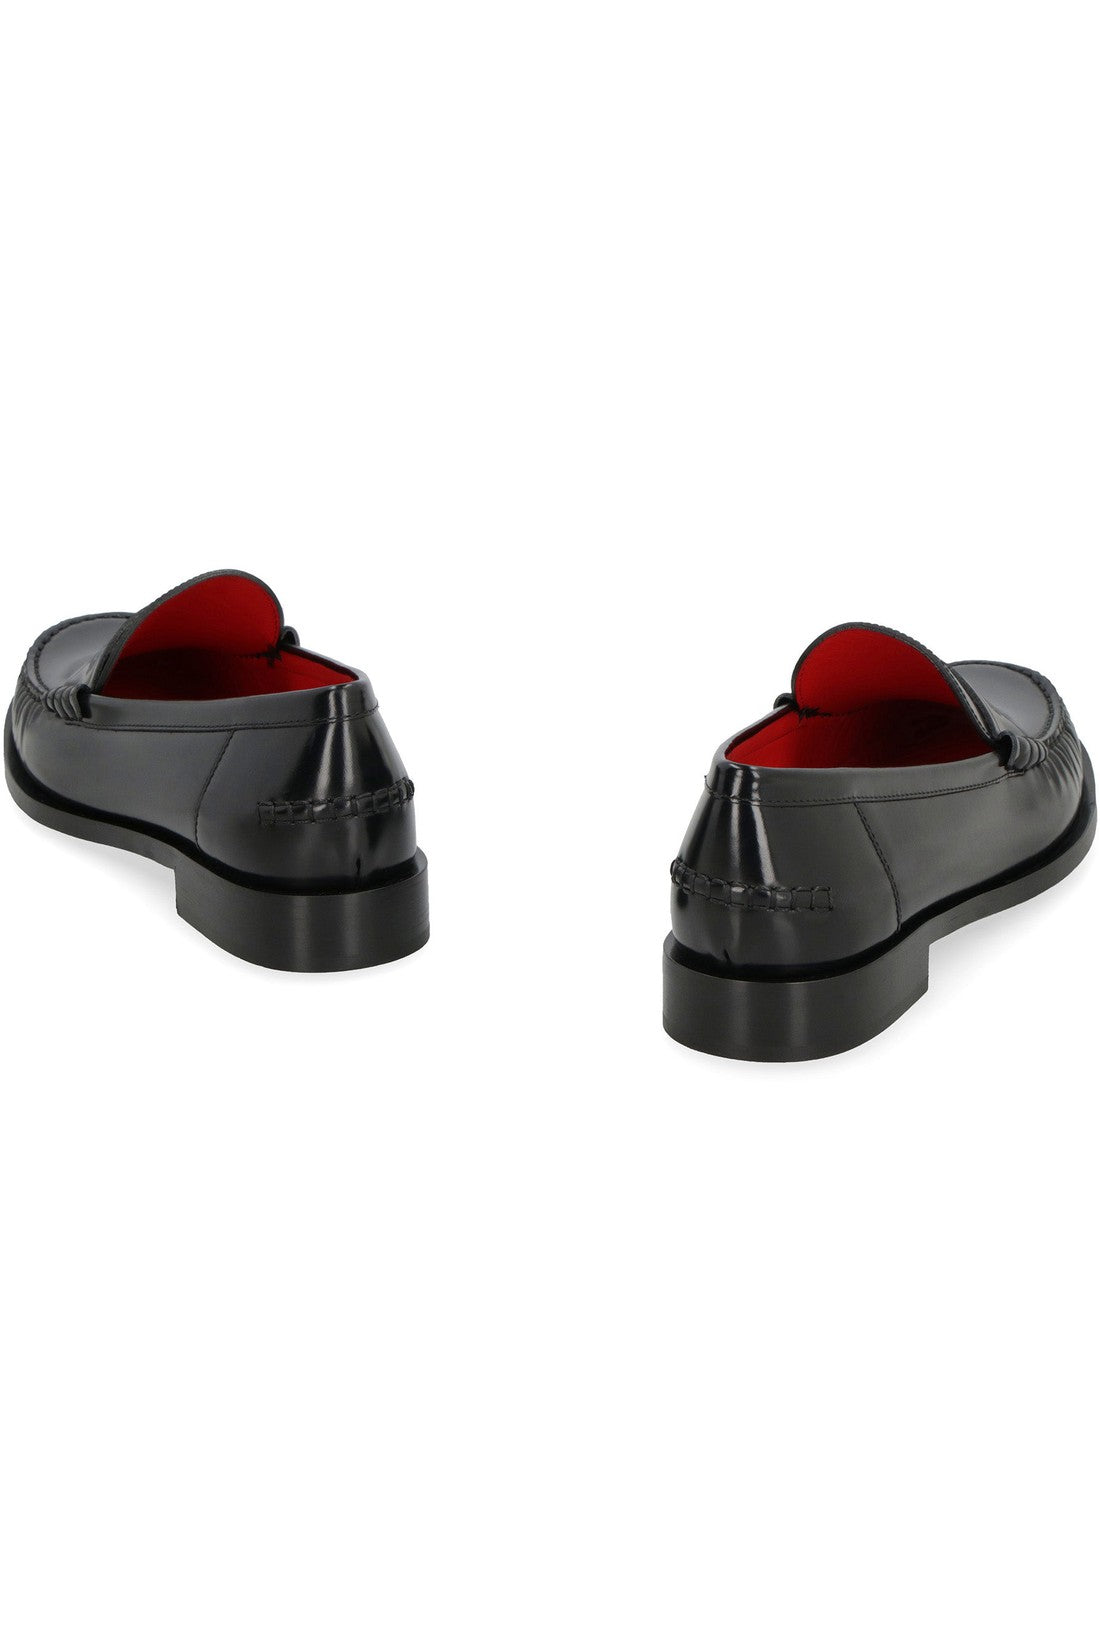 FERRAGAMO-OUTLET-SALE-Brushed leather loafers-ARCHIVIST